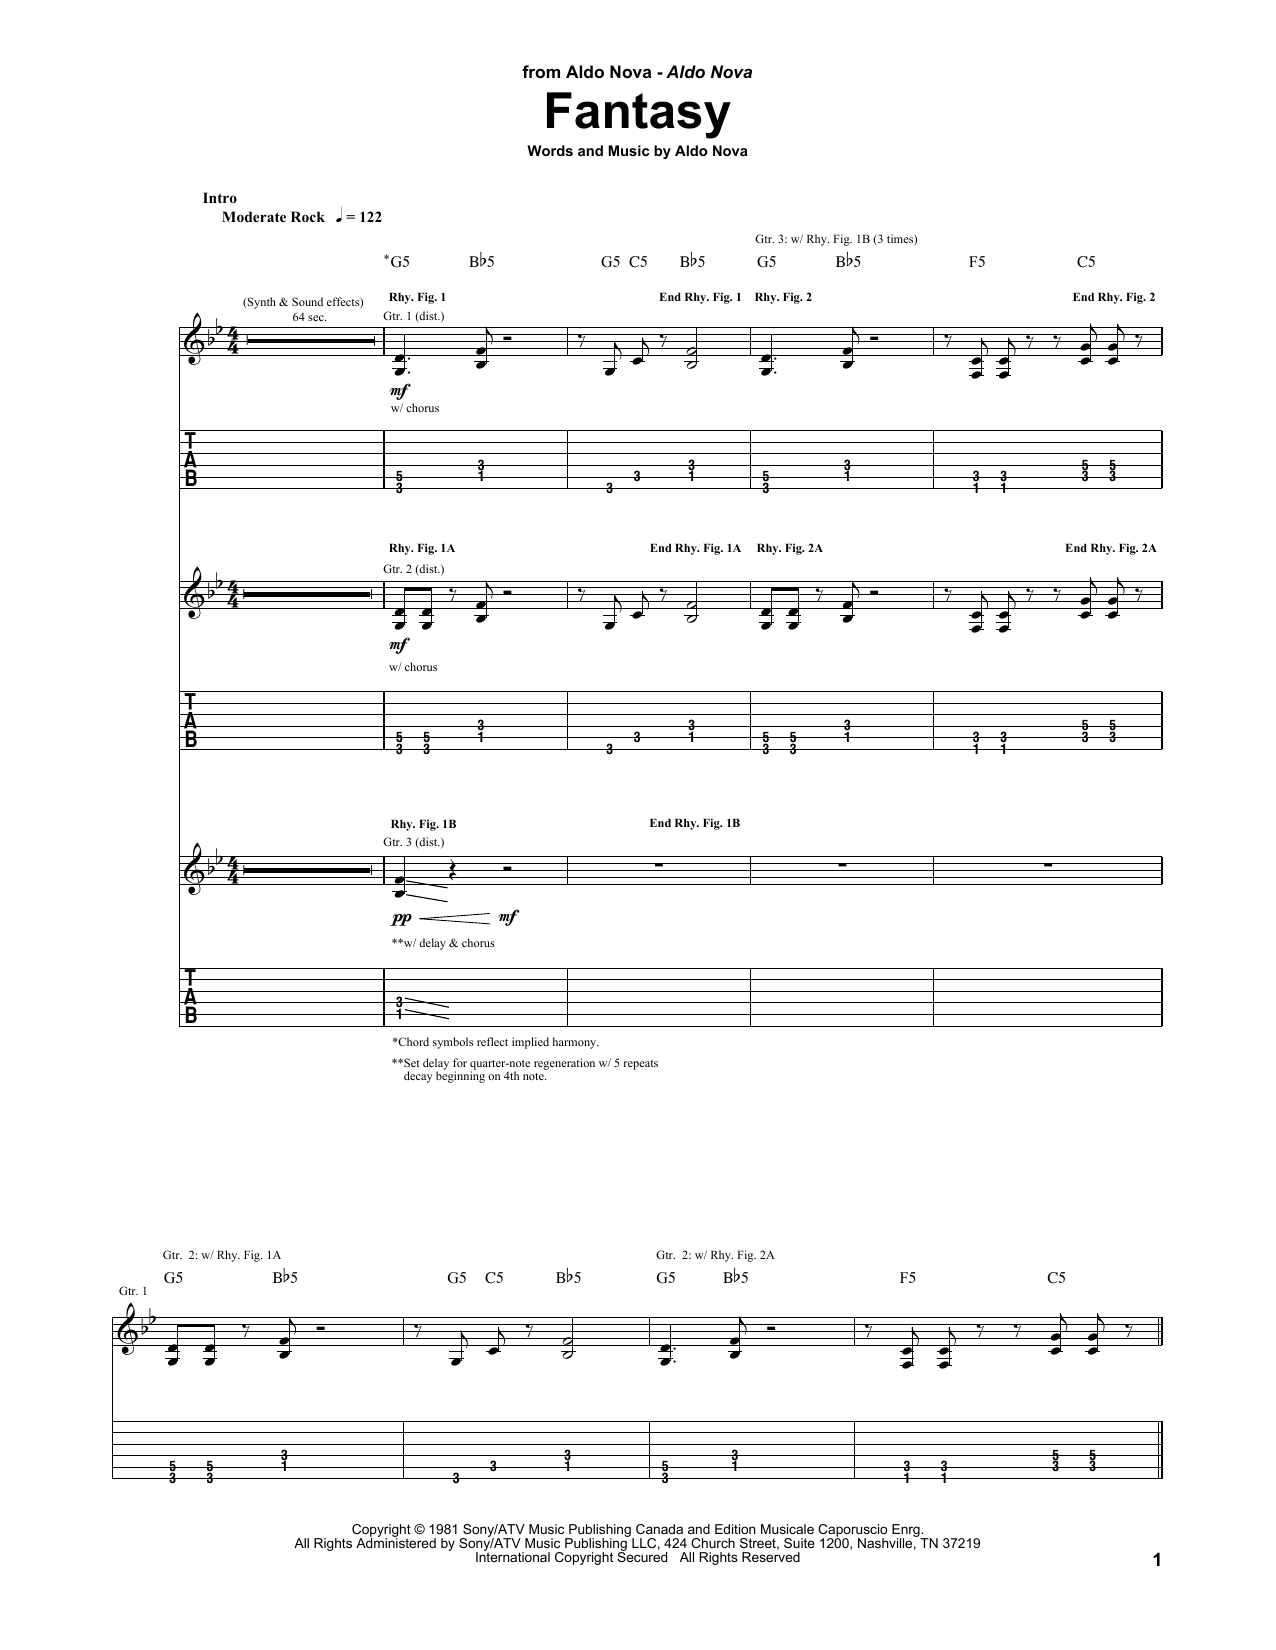 Aldo Nova Fantasy Sheet Music Notes & Chords for Guitar Tab - Download or Print PDF